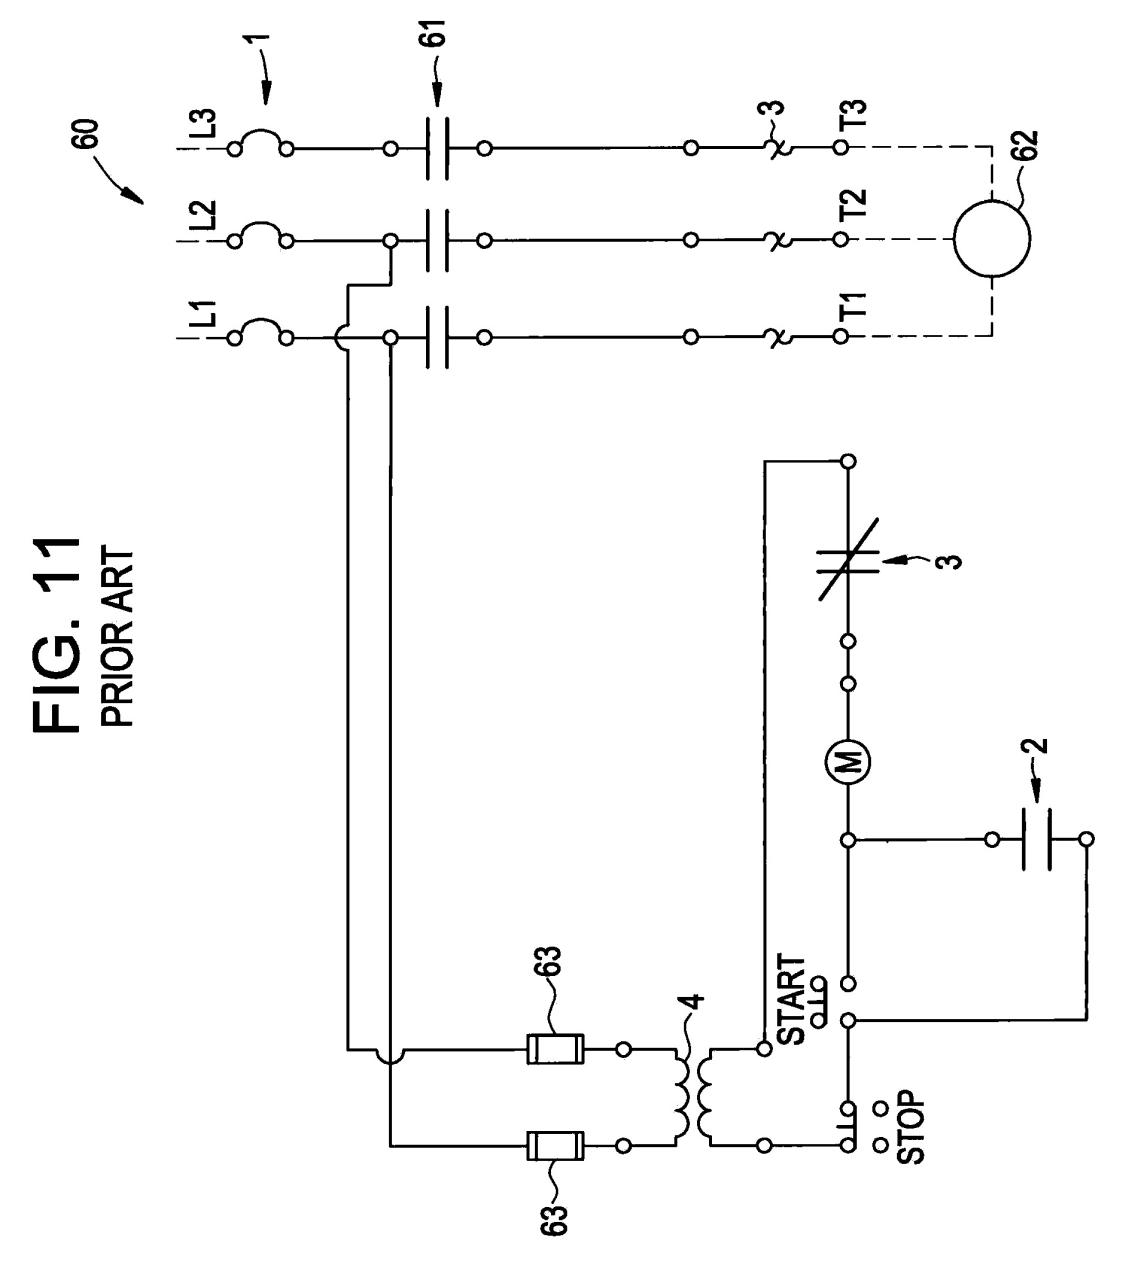 3 Phase Square D Motor Starter Wiring Diagram